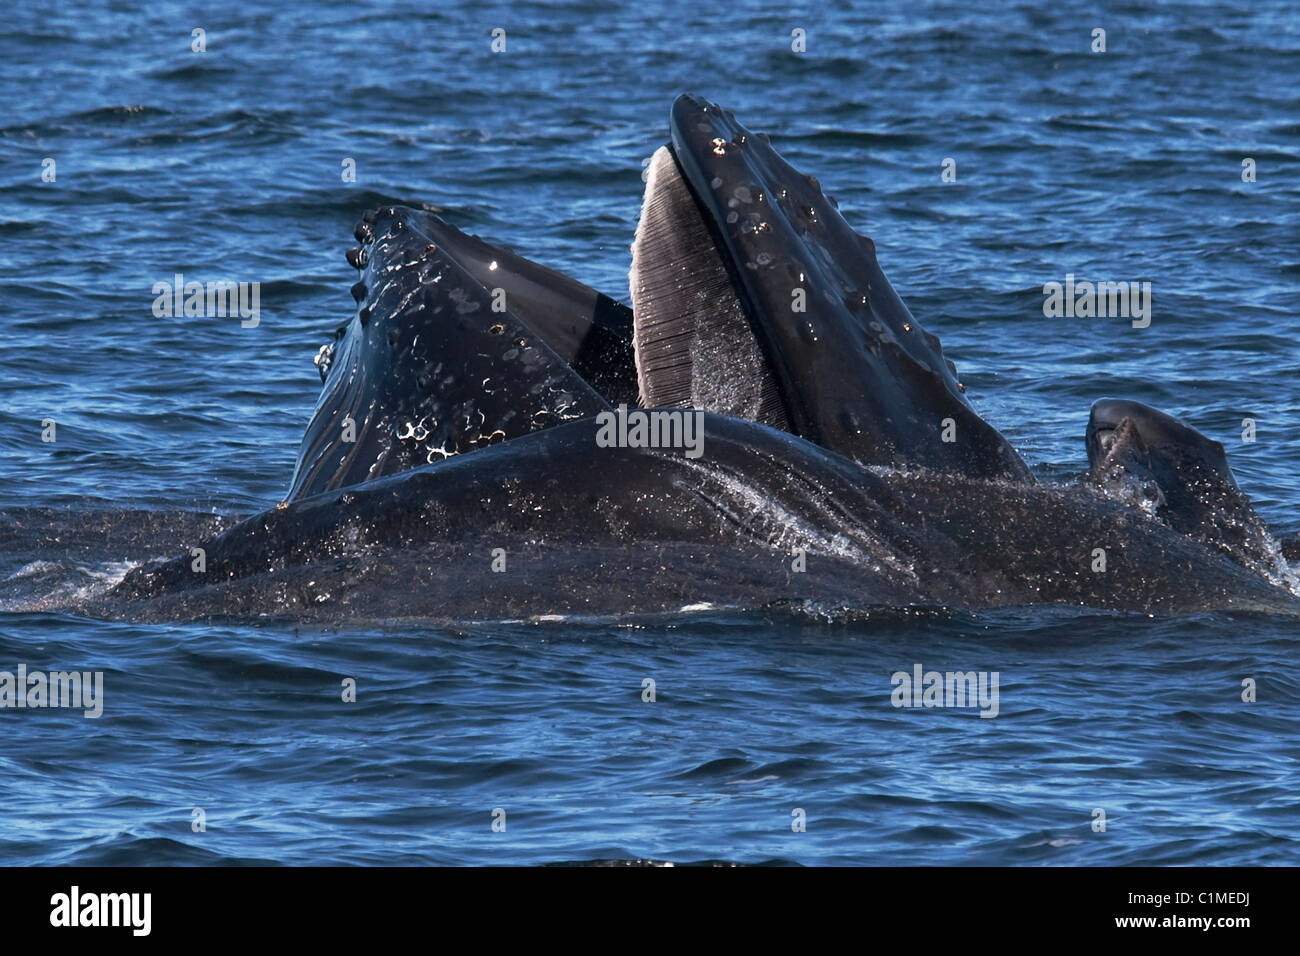 Humpback Whale (Megaptera novaeangliae) lunge-feeding on Krill. Monterey, California, Pacific Ocean. Stock Photo